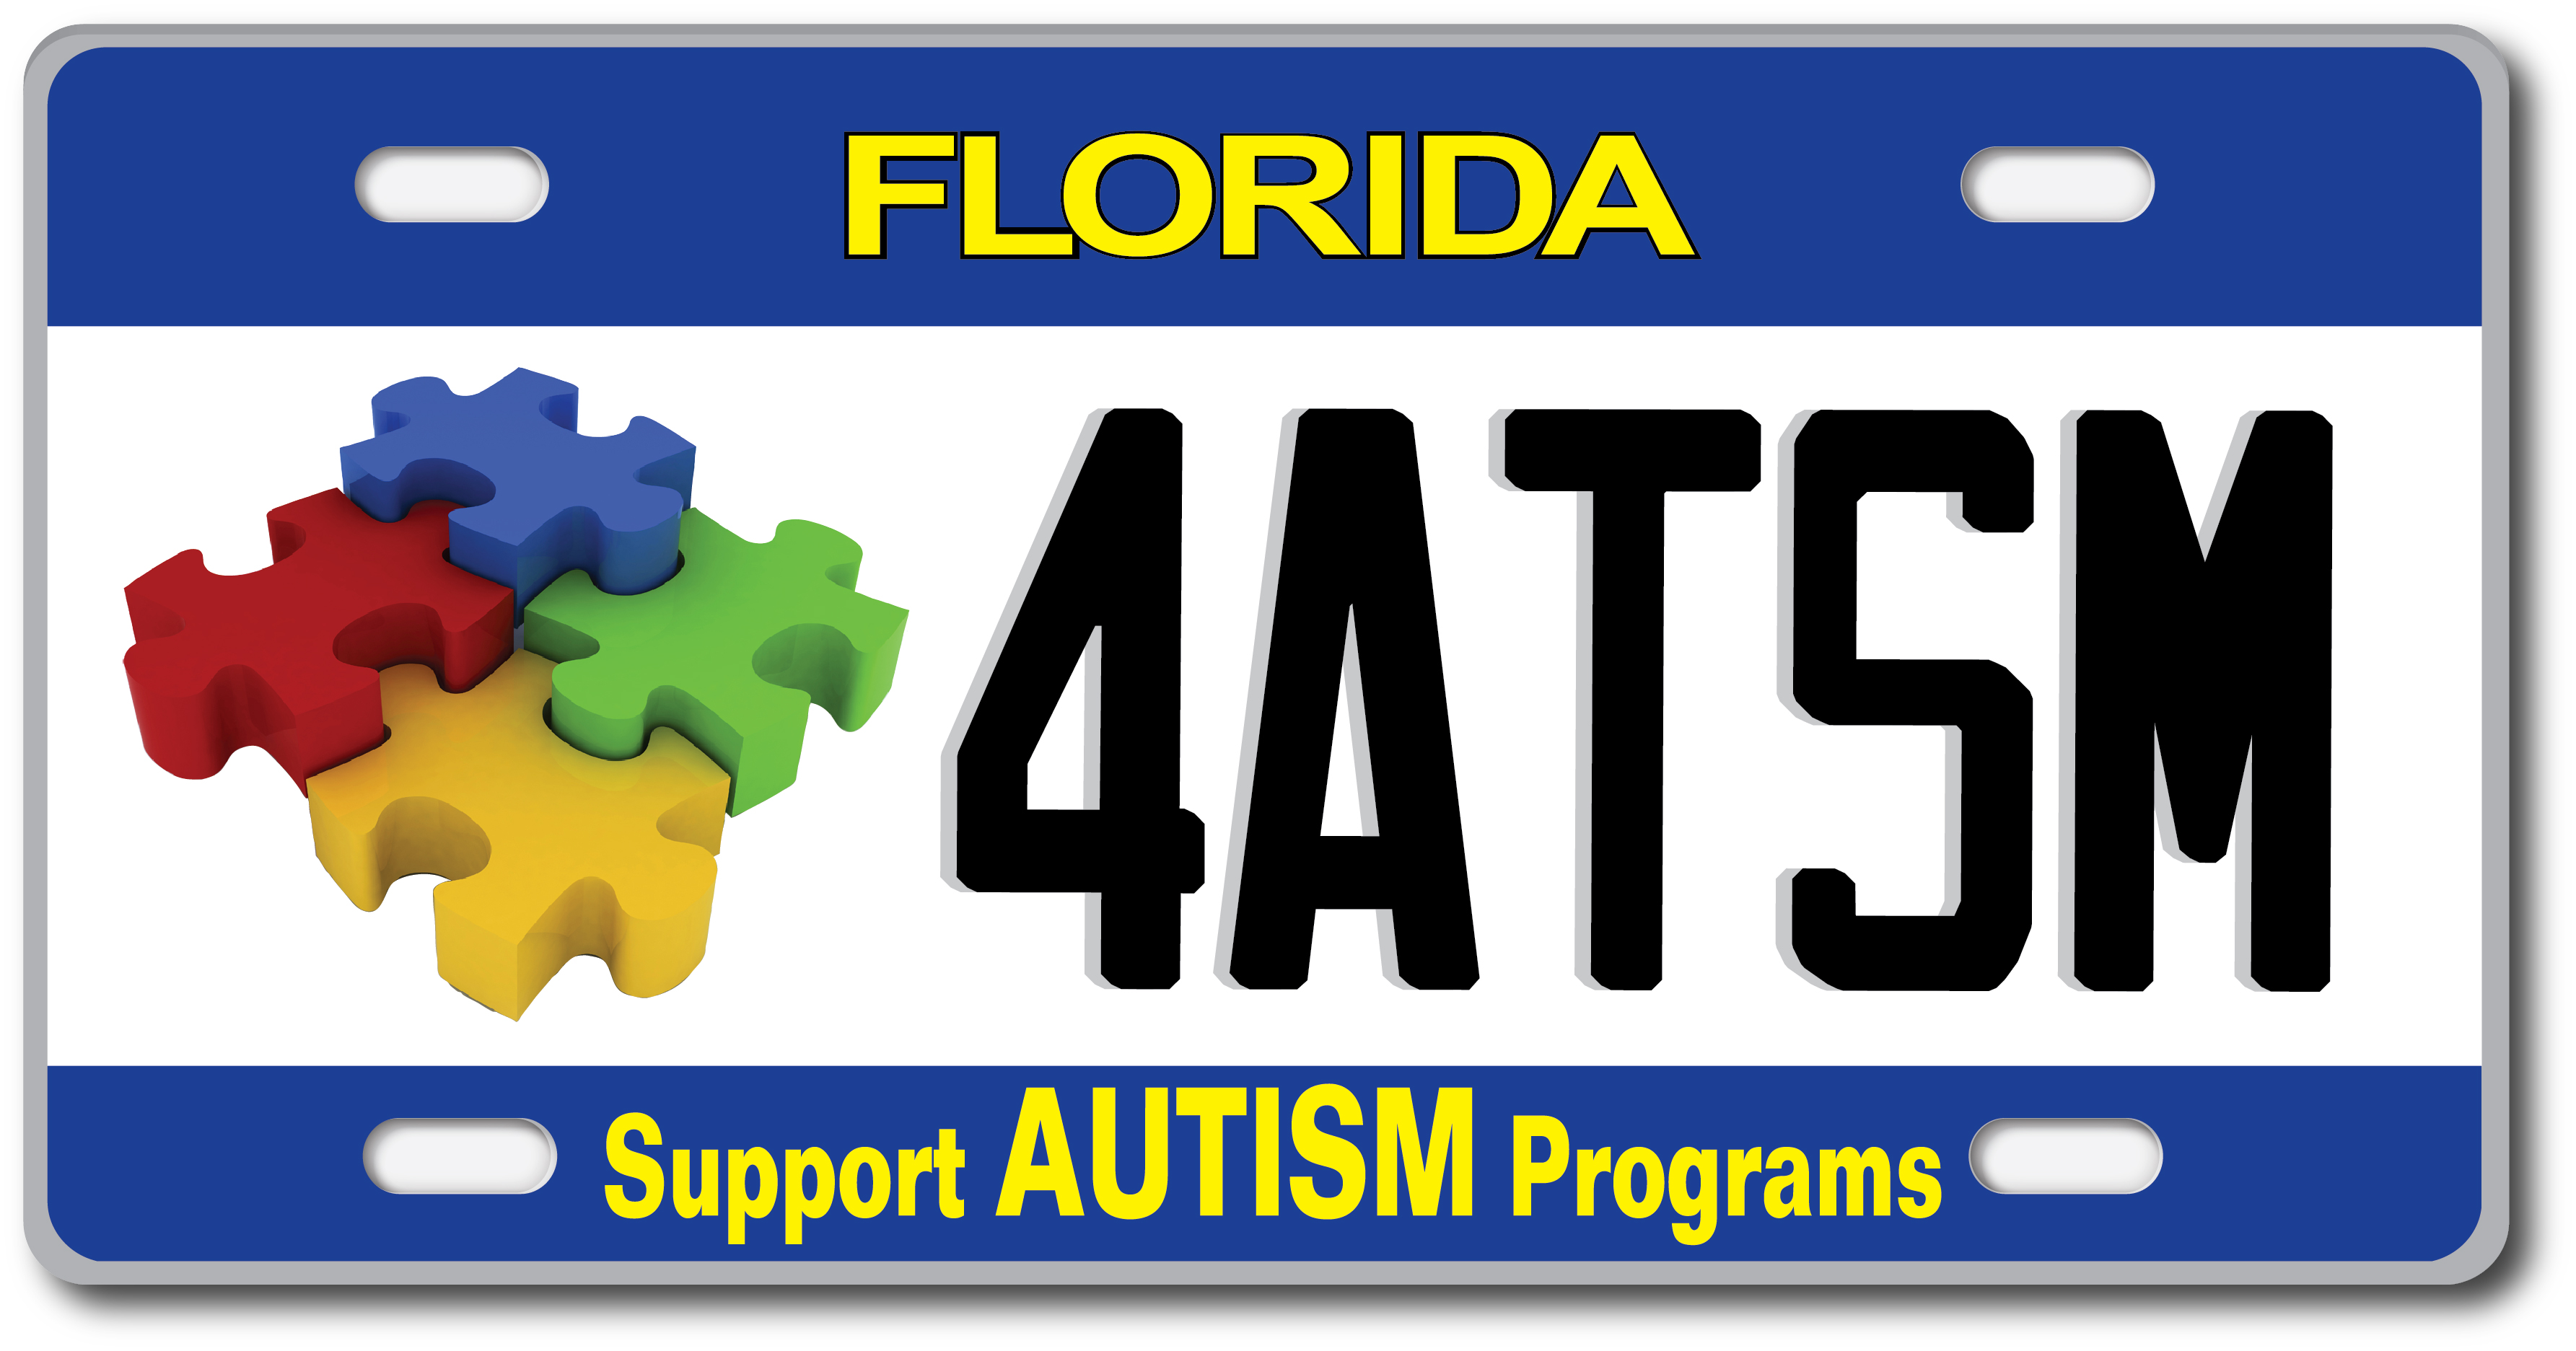 Autism Florida license plate graphic